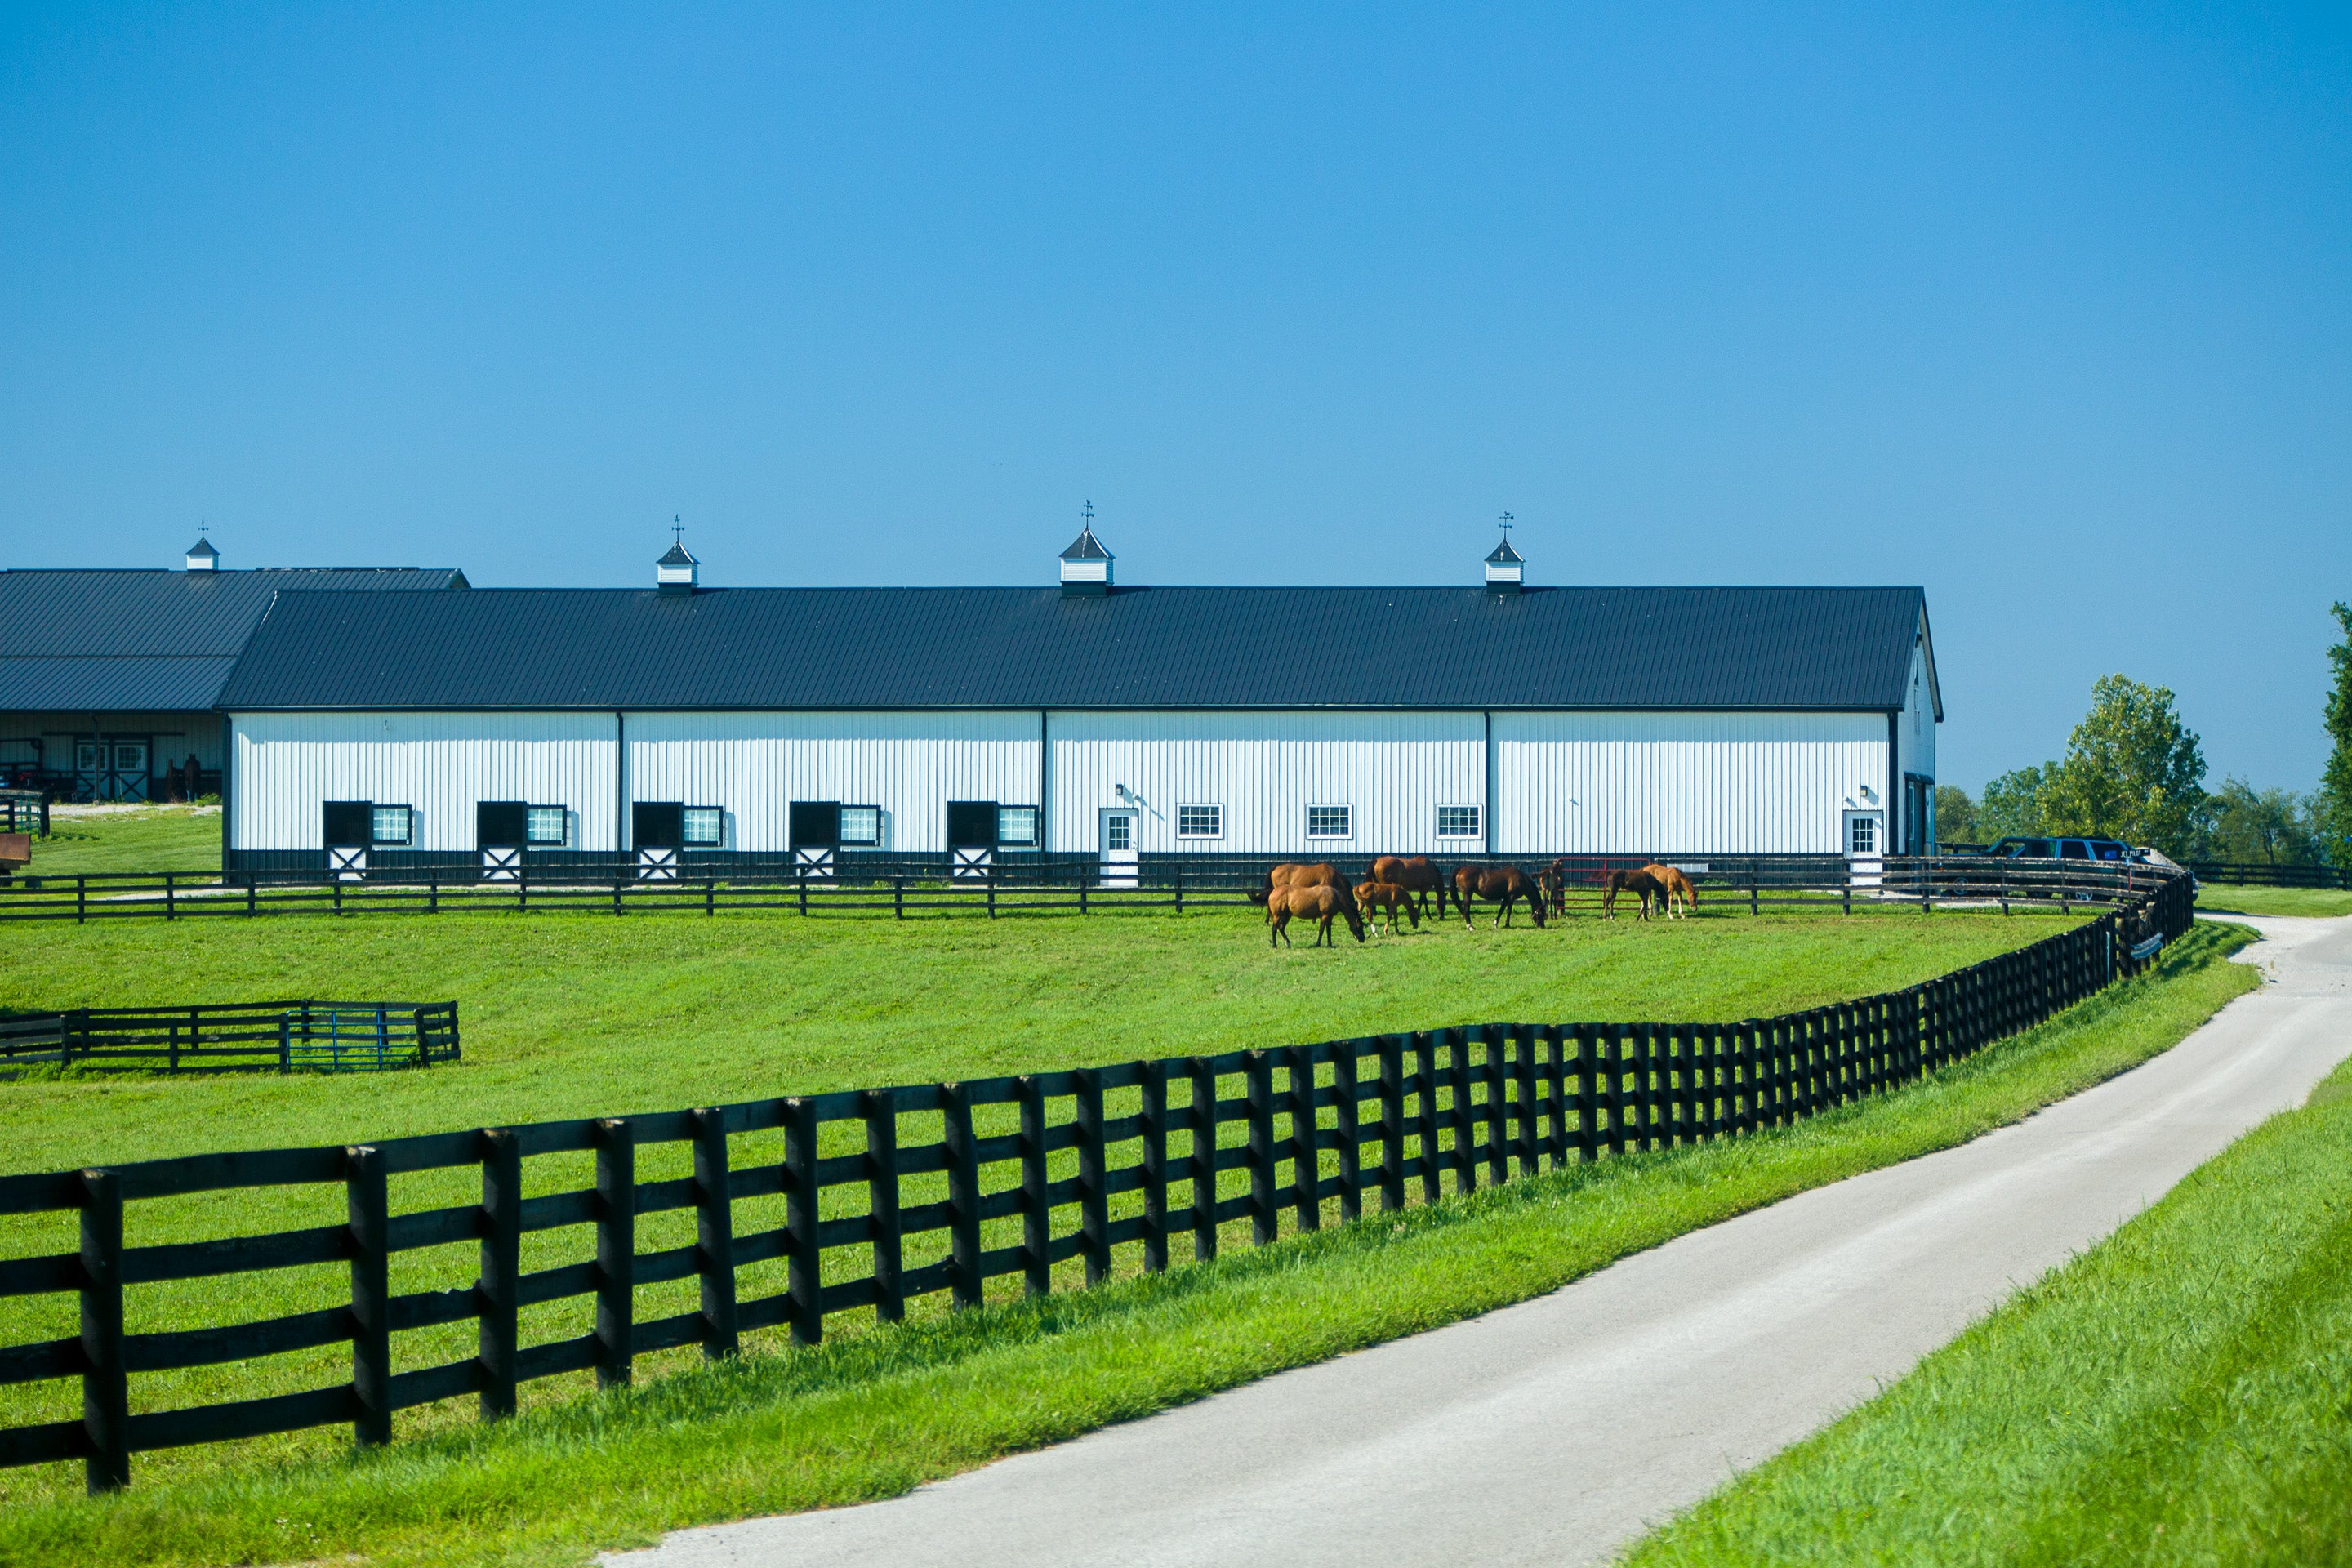 University of Kentucky Maine Chance Farm facilities